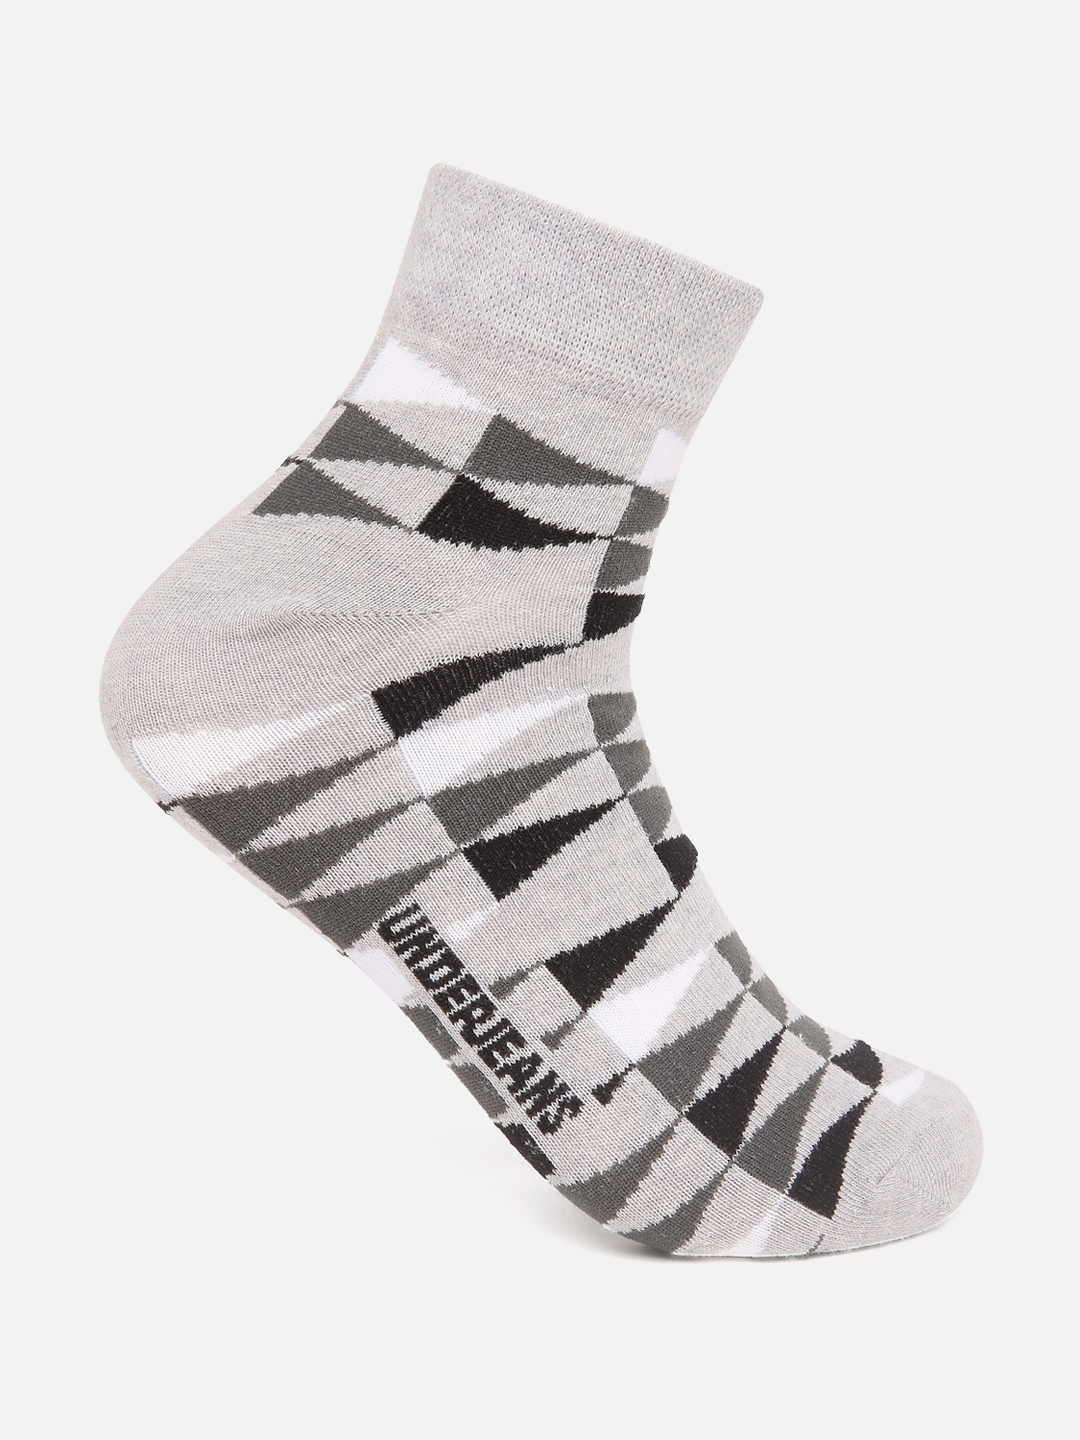 Spykar | Underjeans by Spykar Men Grey Ankle Length (Non Terry) Single Pair of Socks